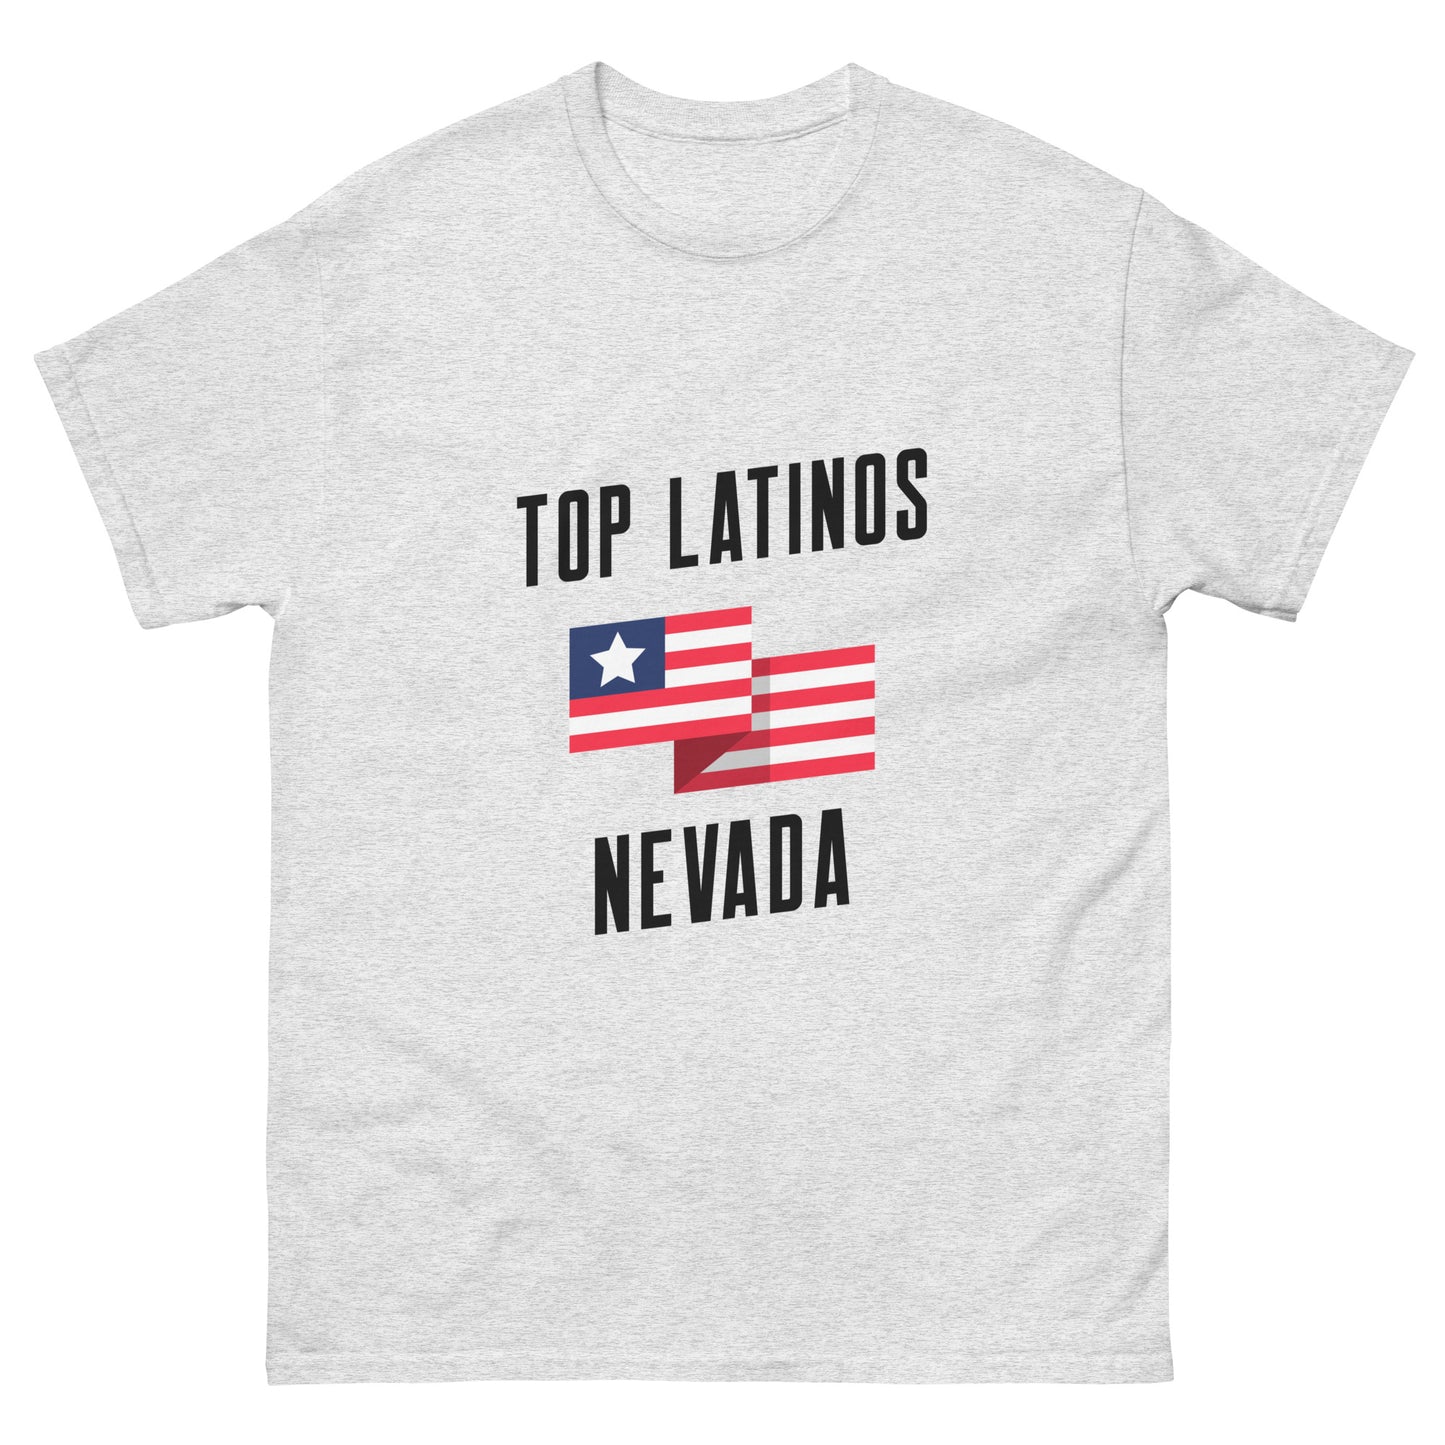 Top Latinos Nevada classic tee